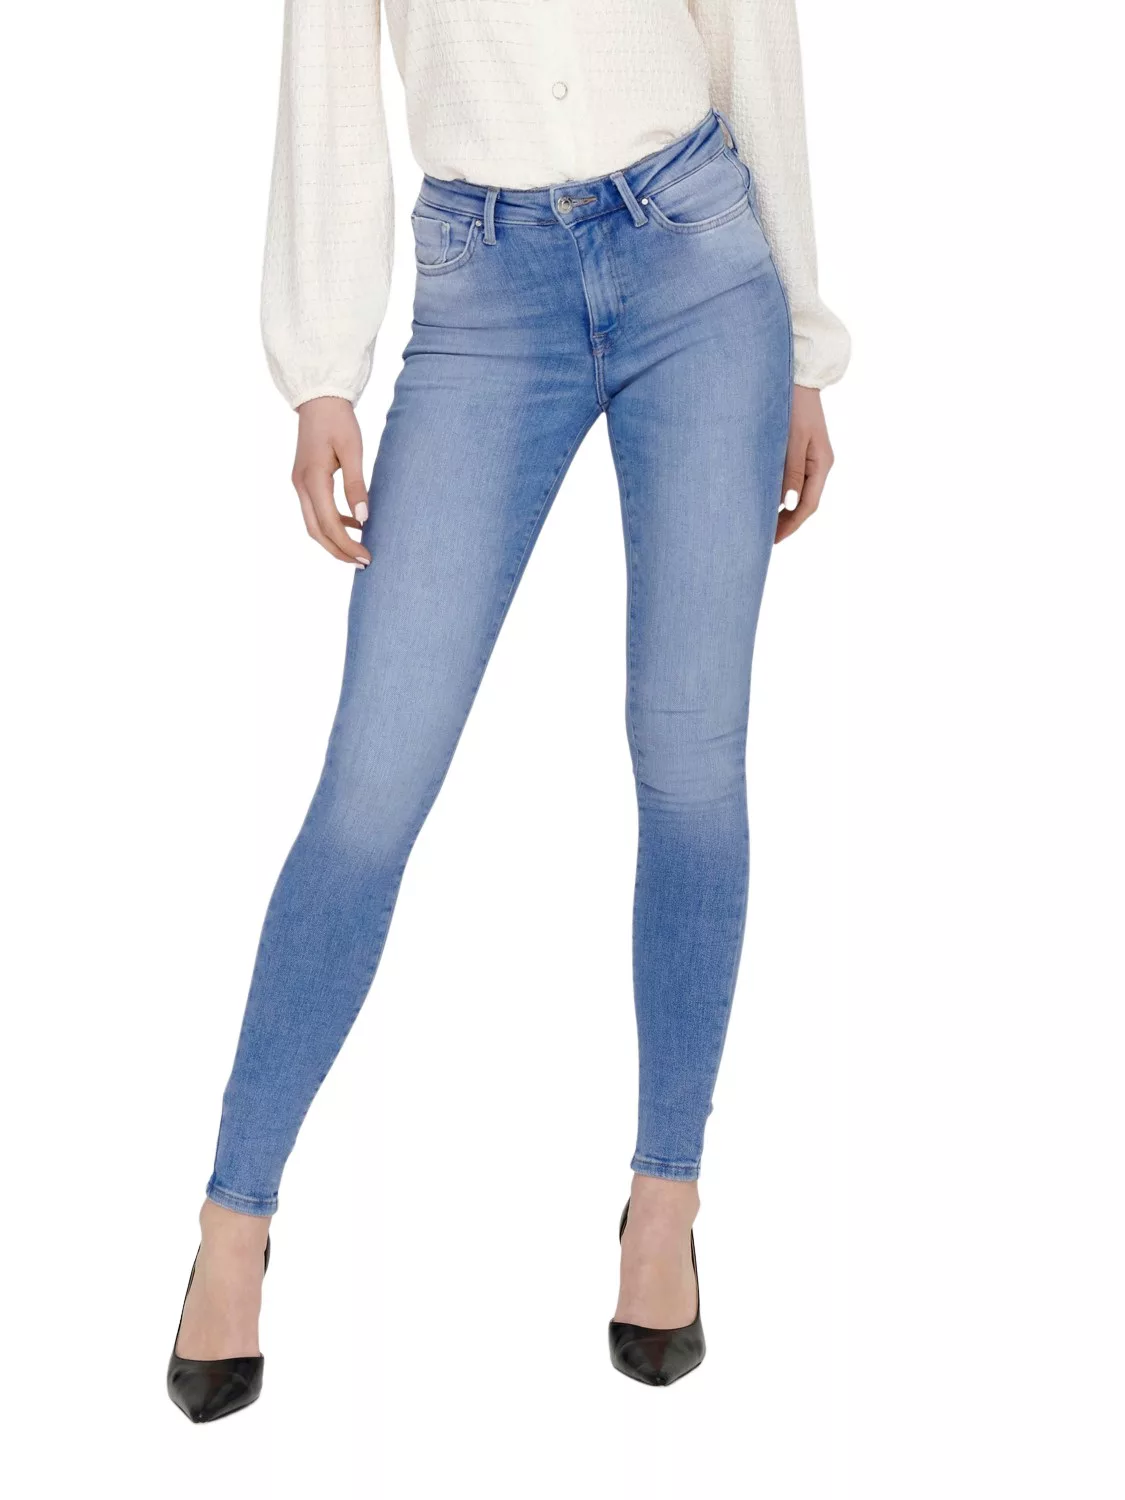 Only Damen Jeans ONLPOWER MID PUSH UP SK DNM REA934 - Skinny Fit - Blau - S günstig online kaufen